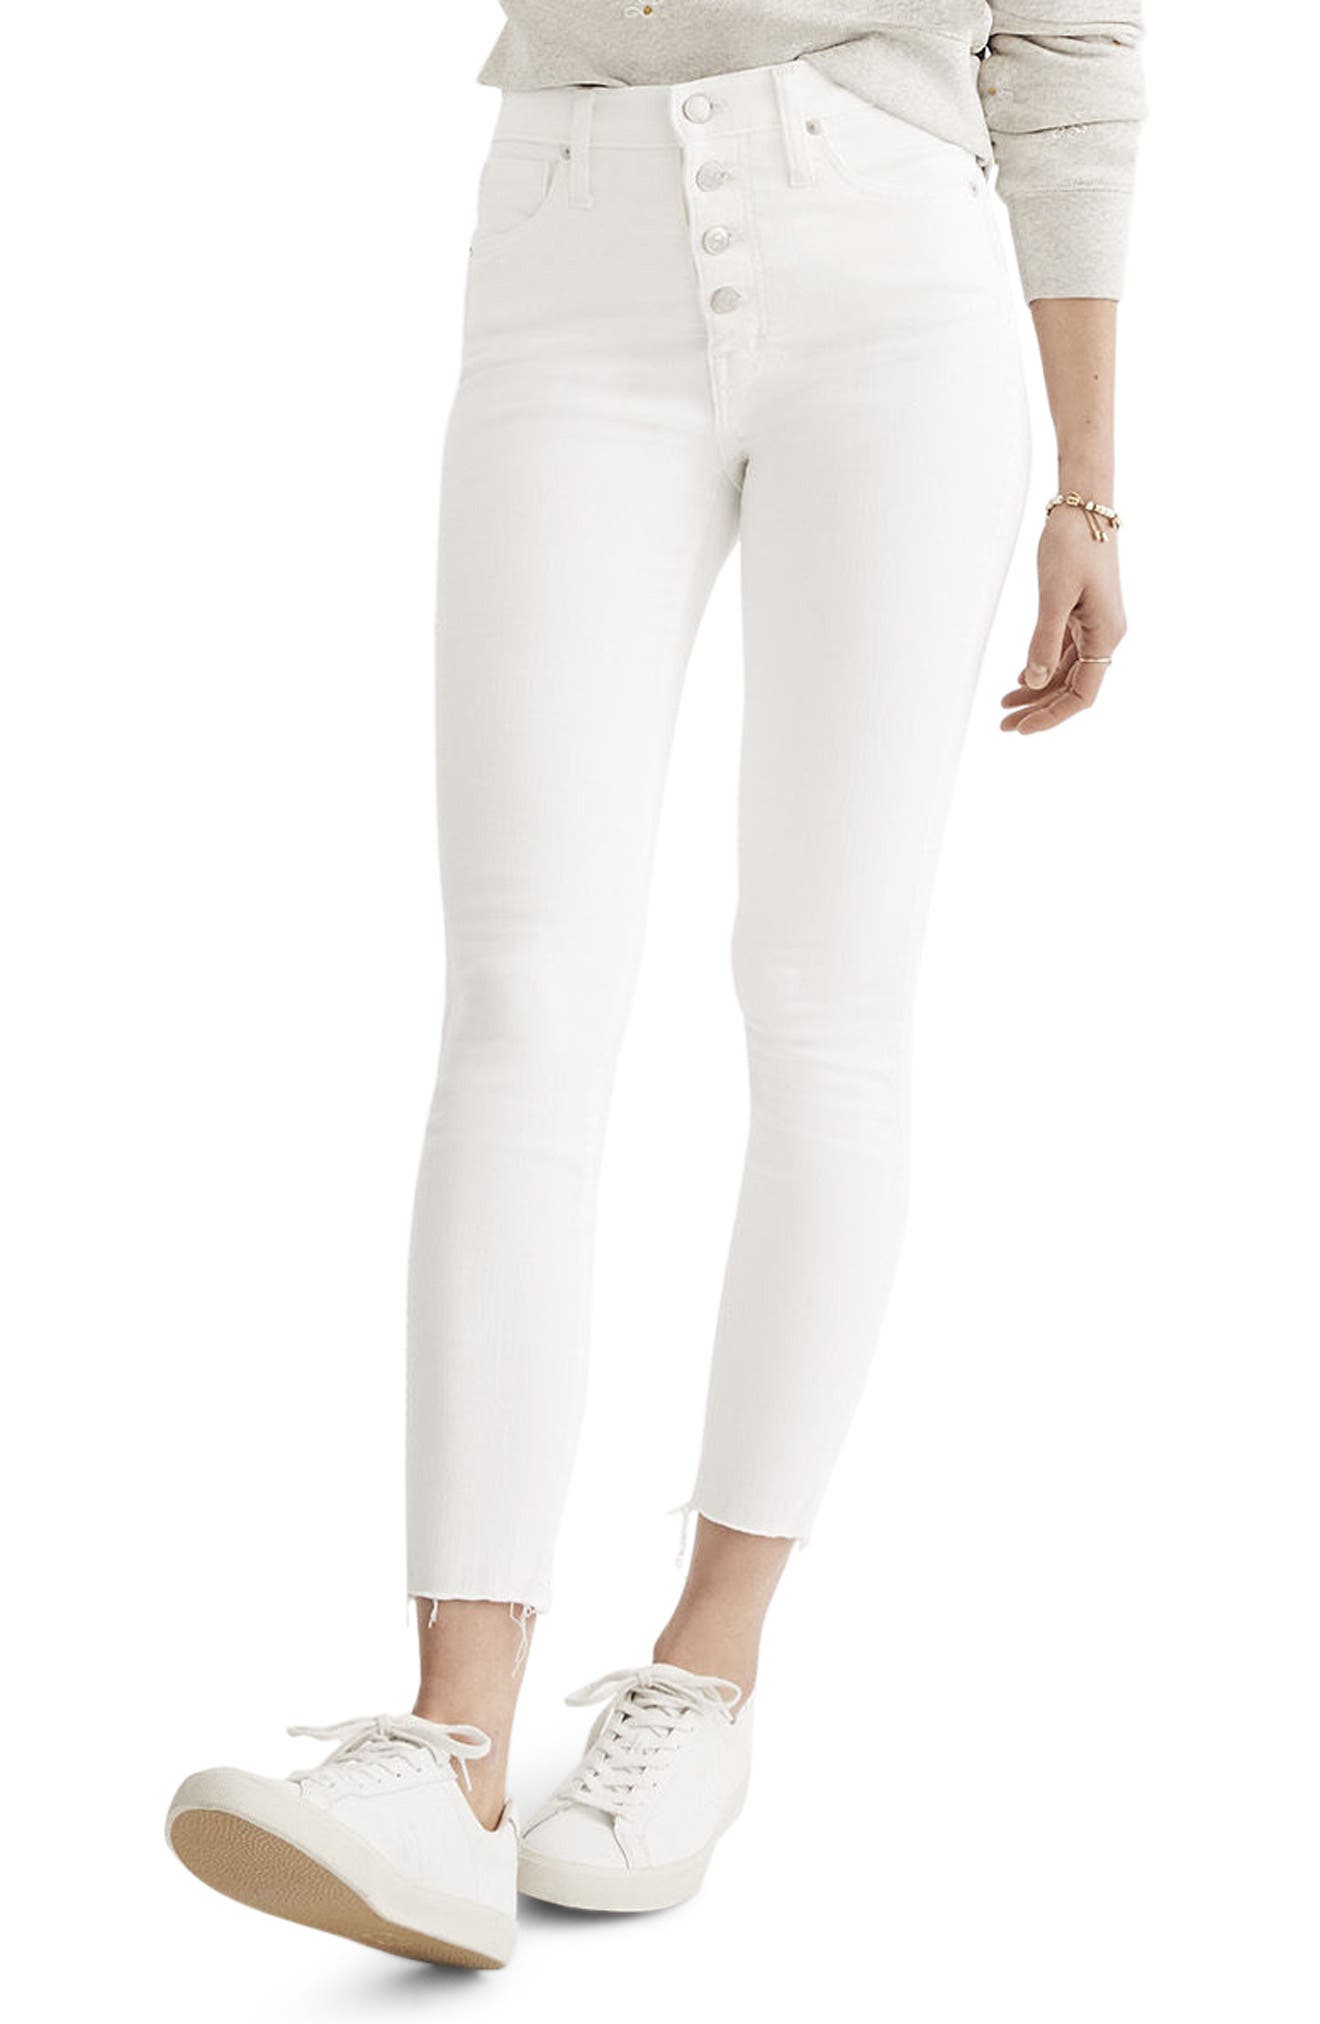 white colour jeans for ladies